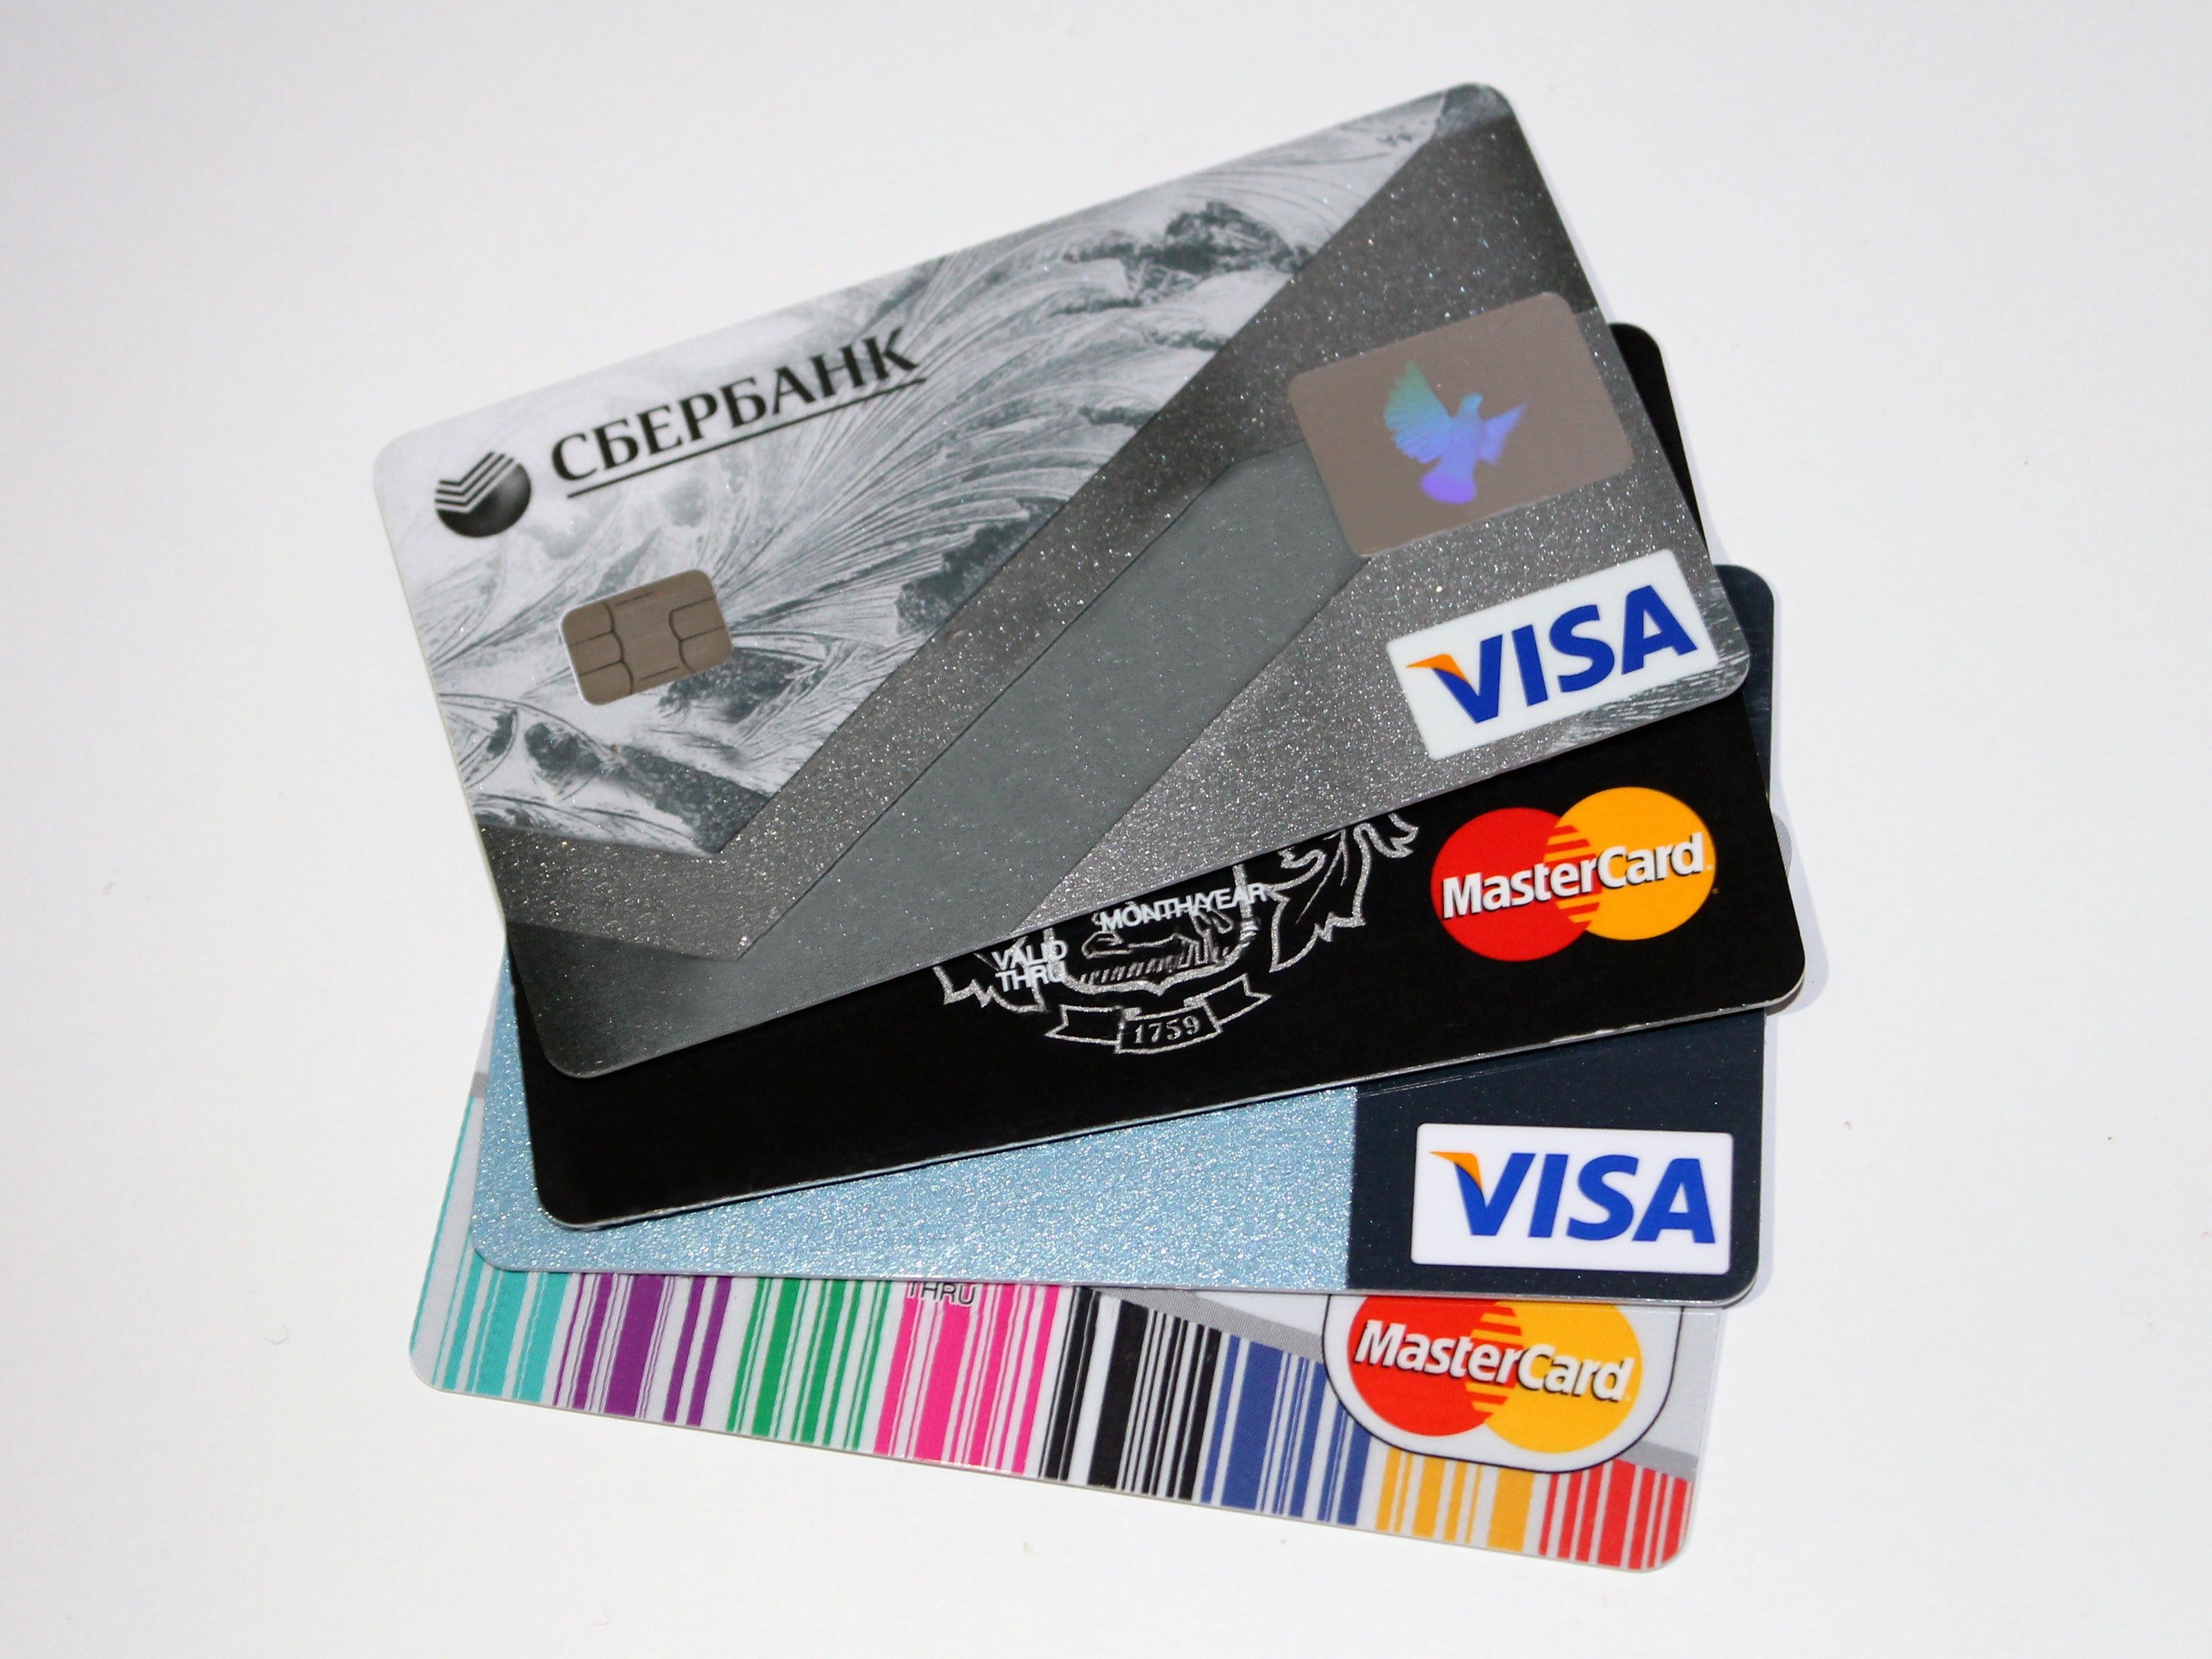 credit-cards